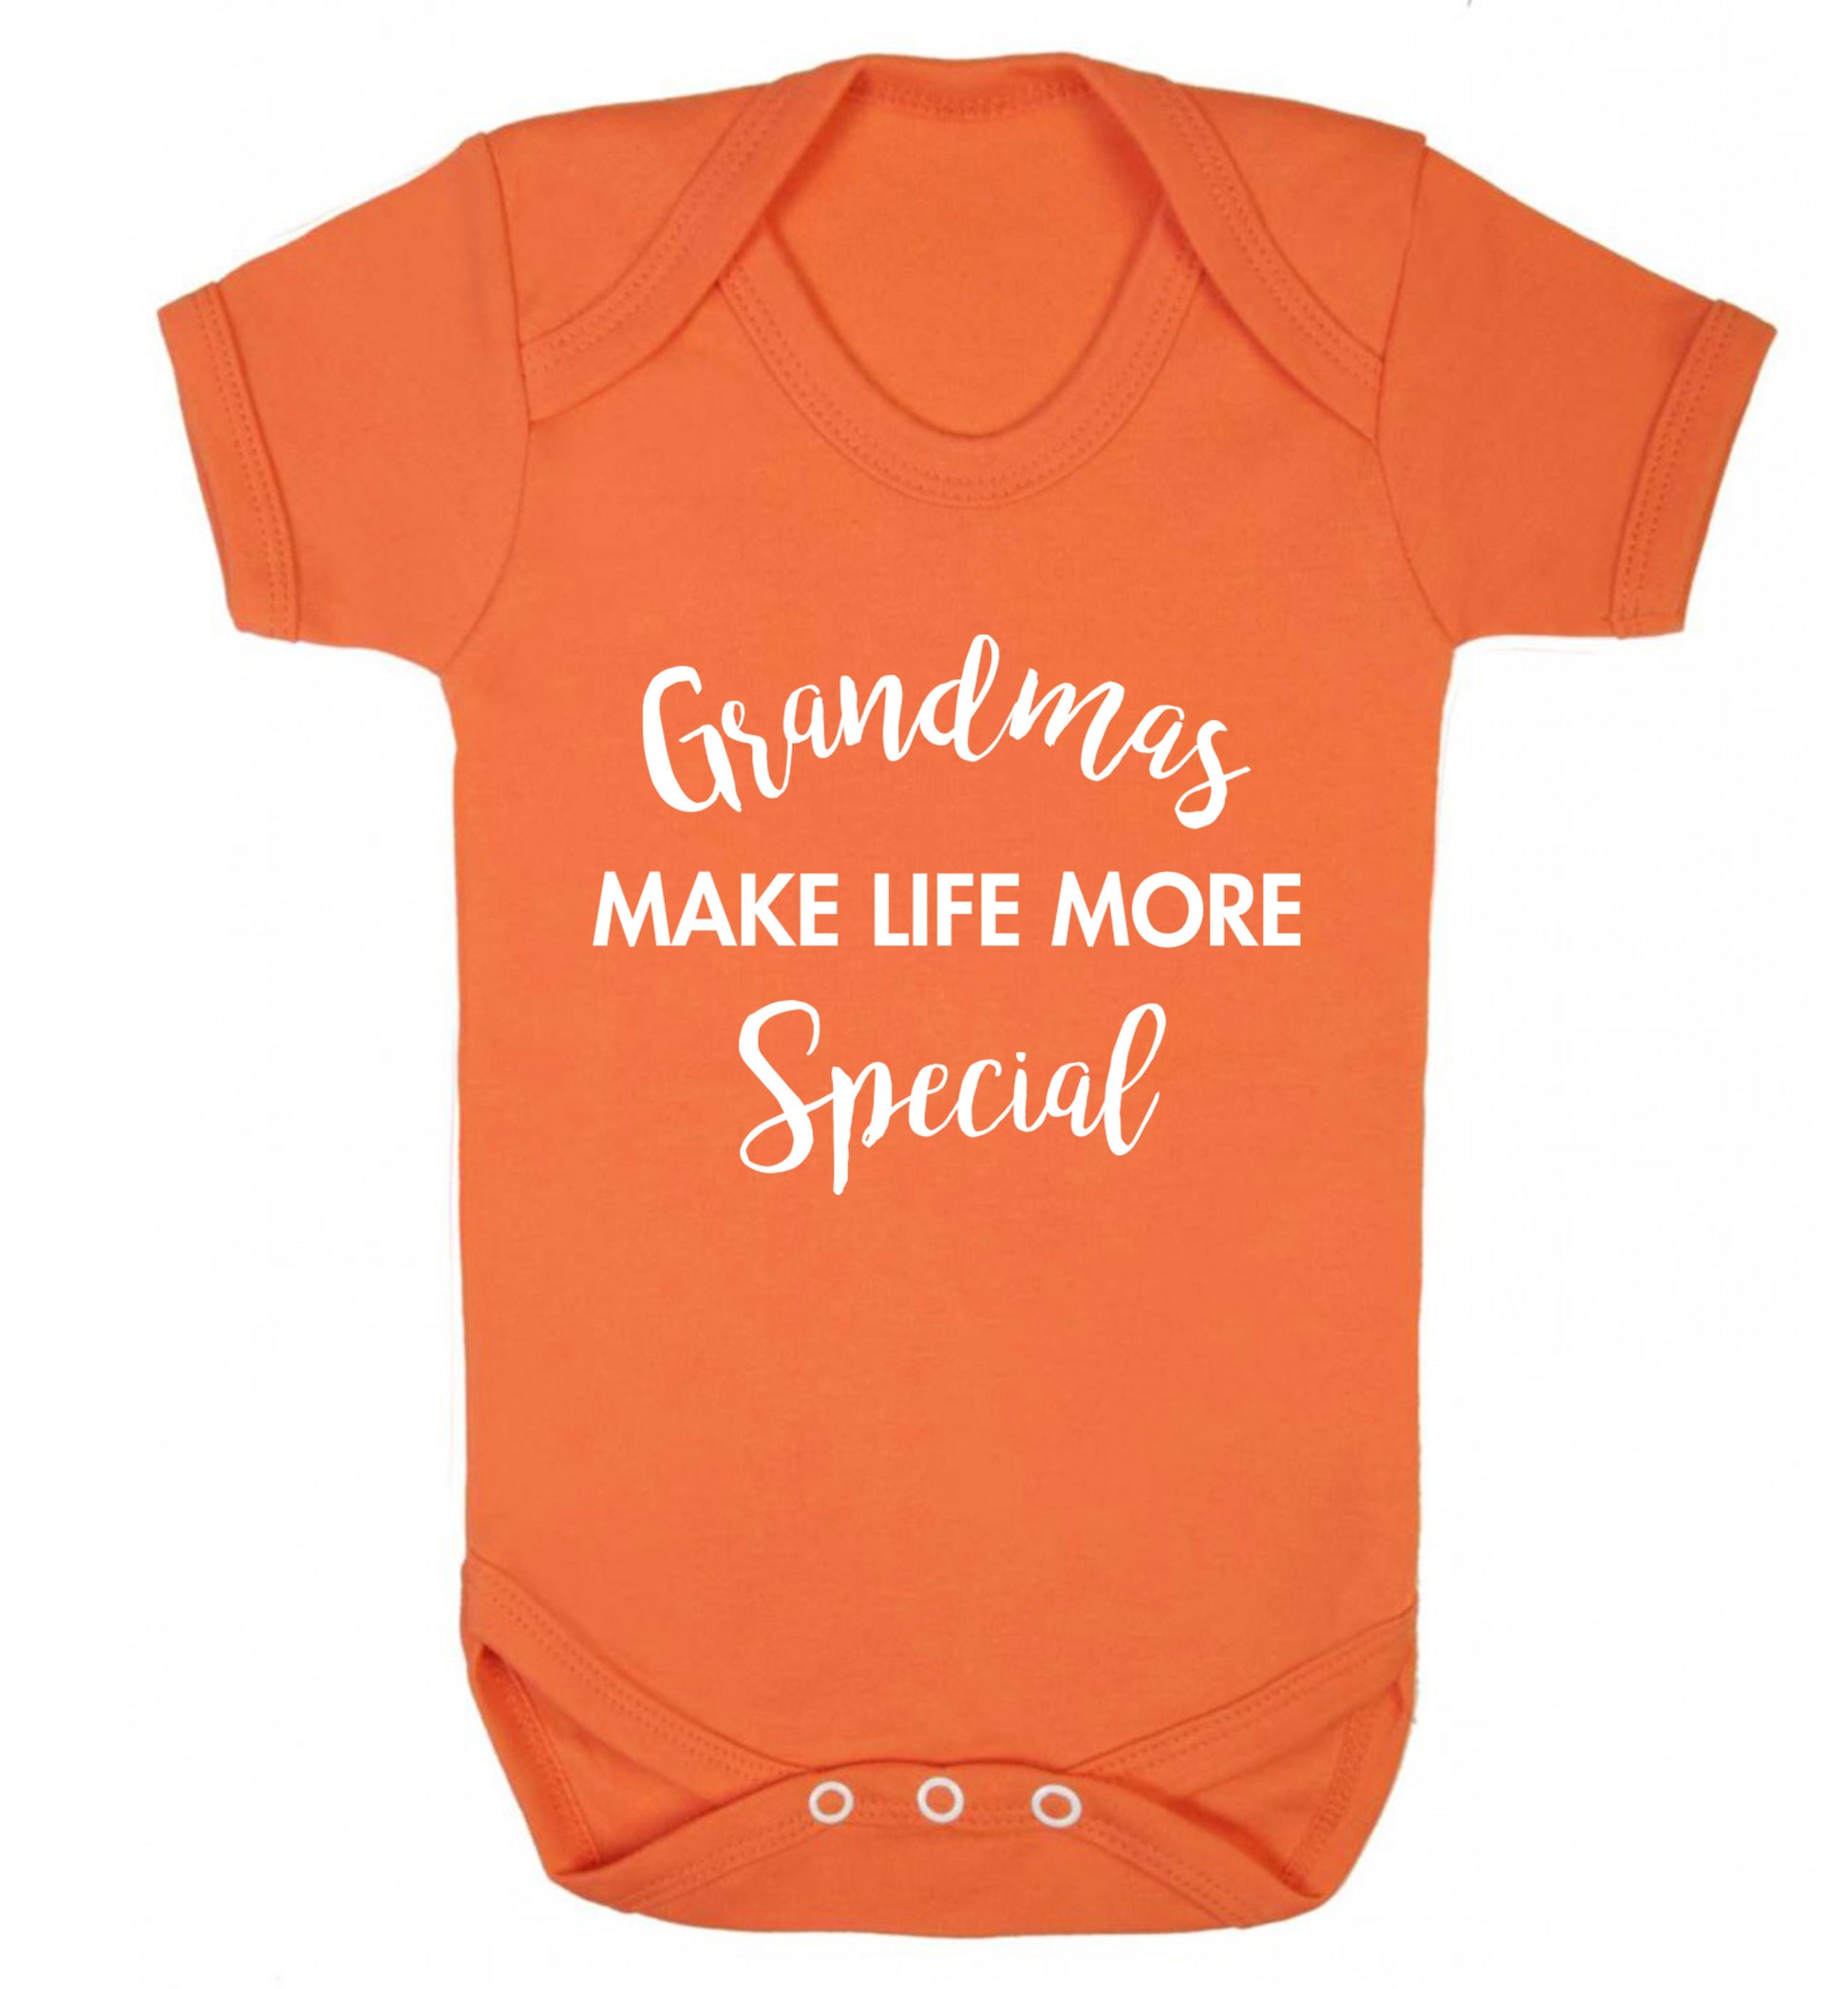 Grandmas make life more special Baby Vest orange 18-24 months